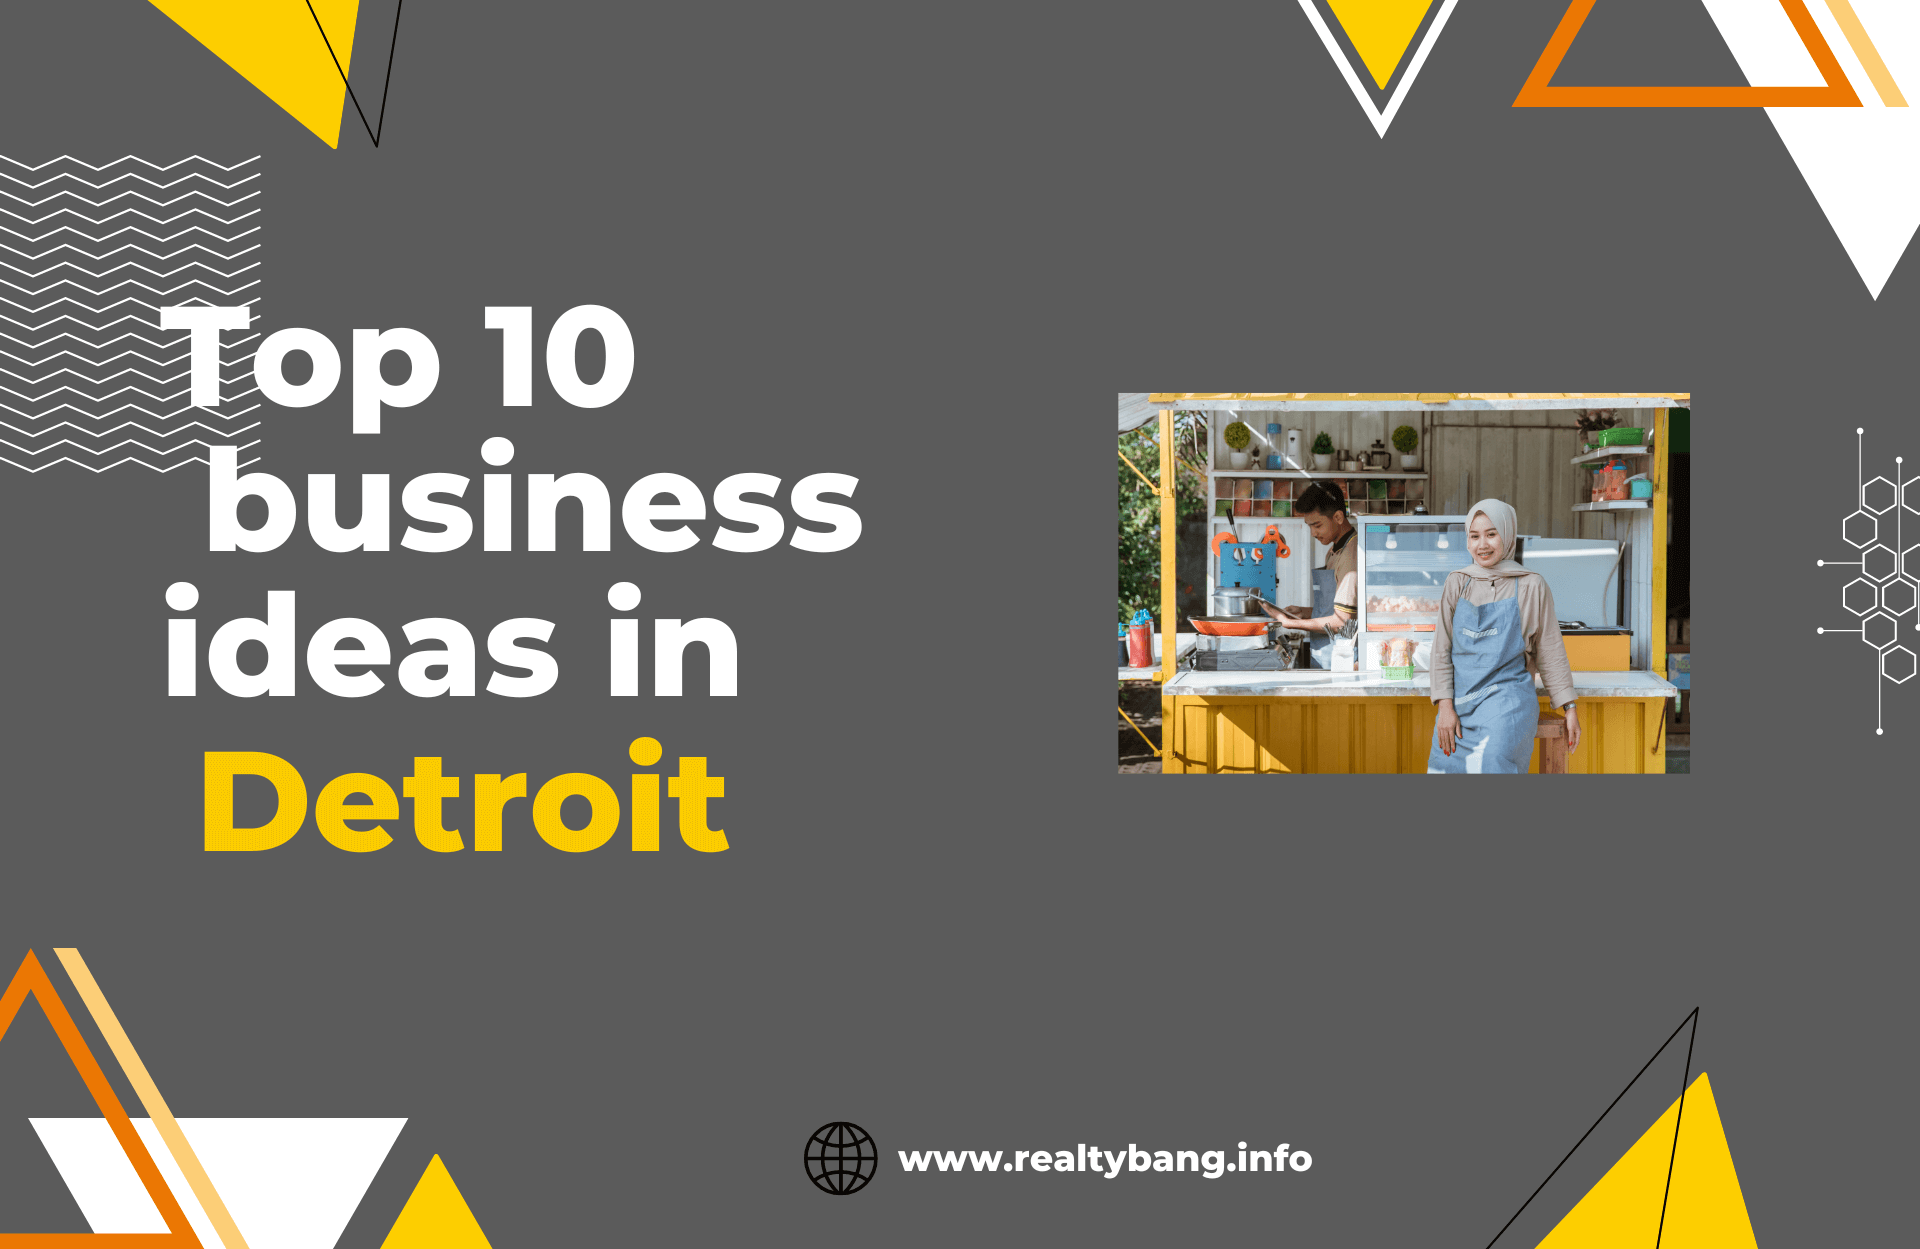 Top 10 business ideas in Detroit